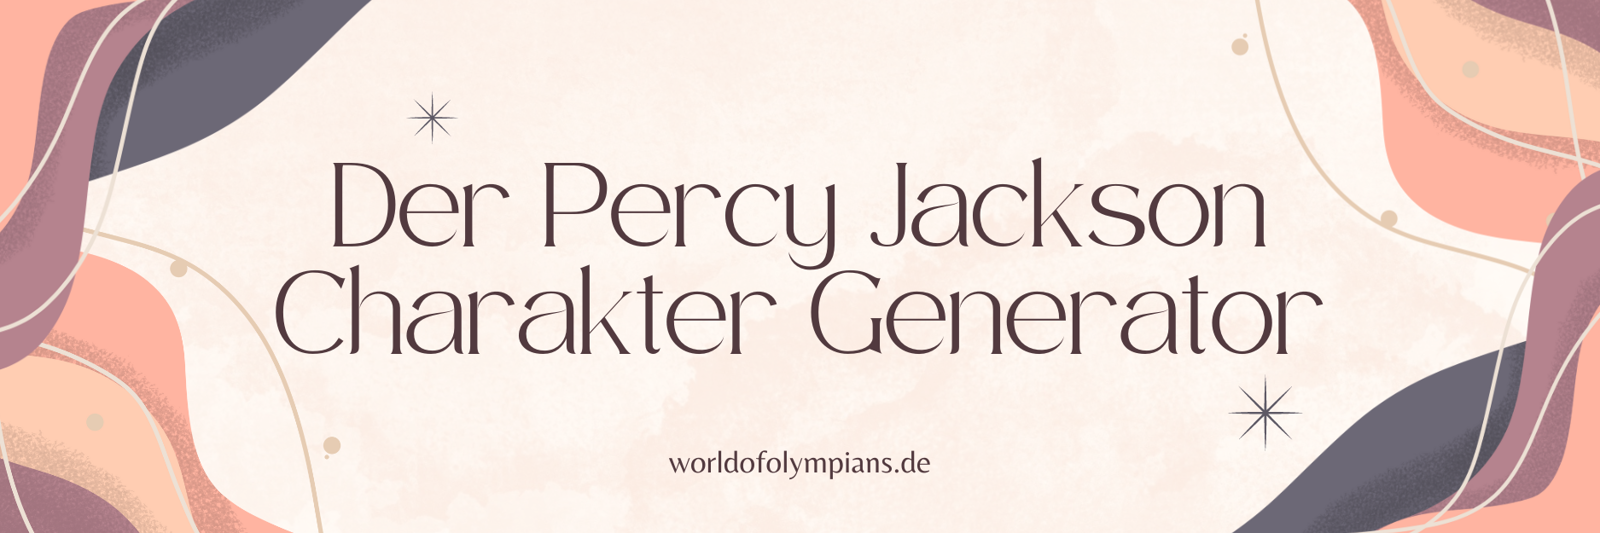 Der Percy Jackson Charakter Generator